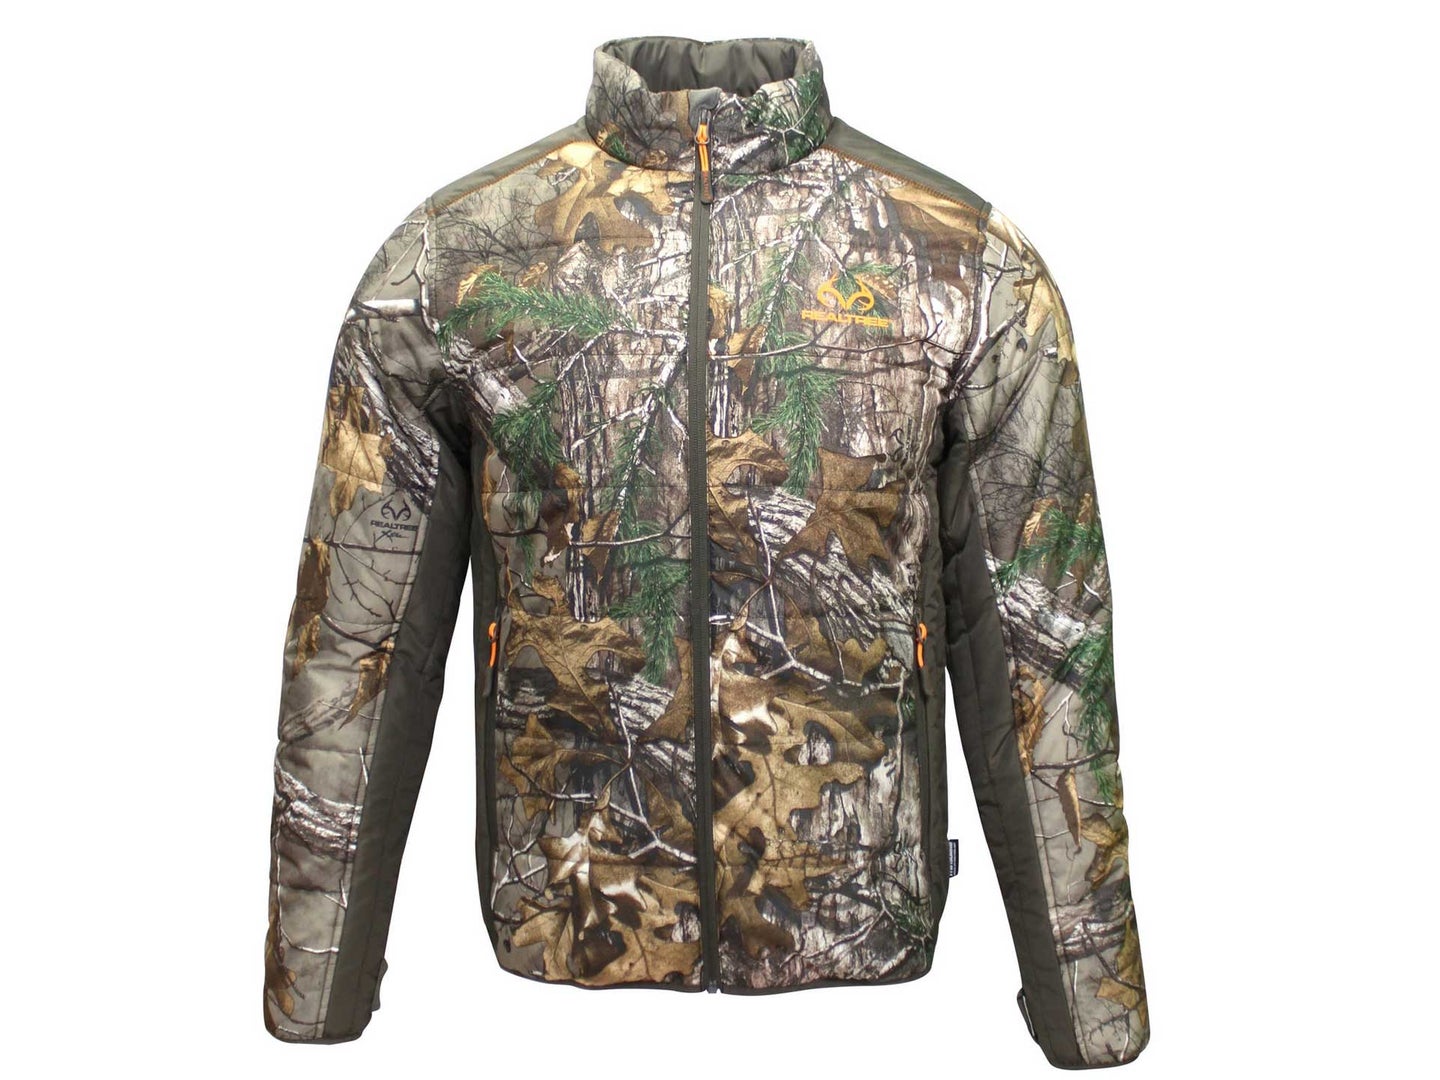 Mossy Oak insulated hunting jacket